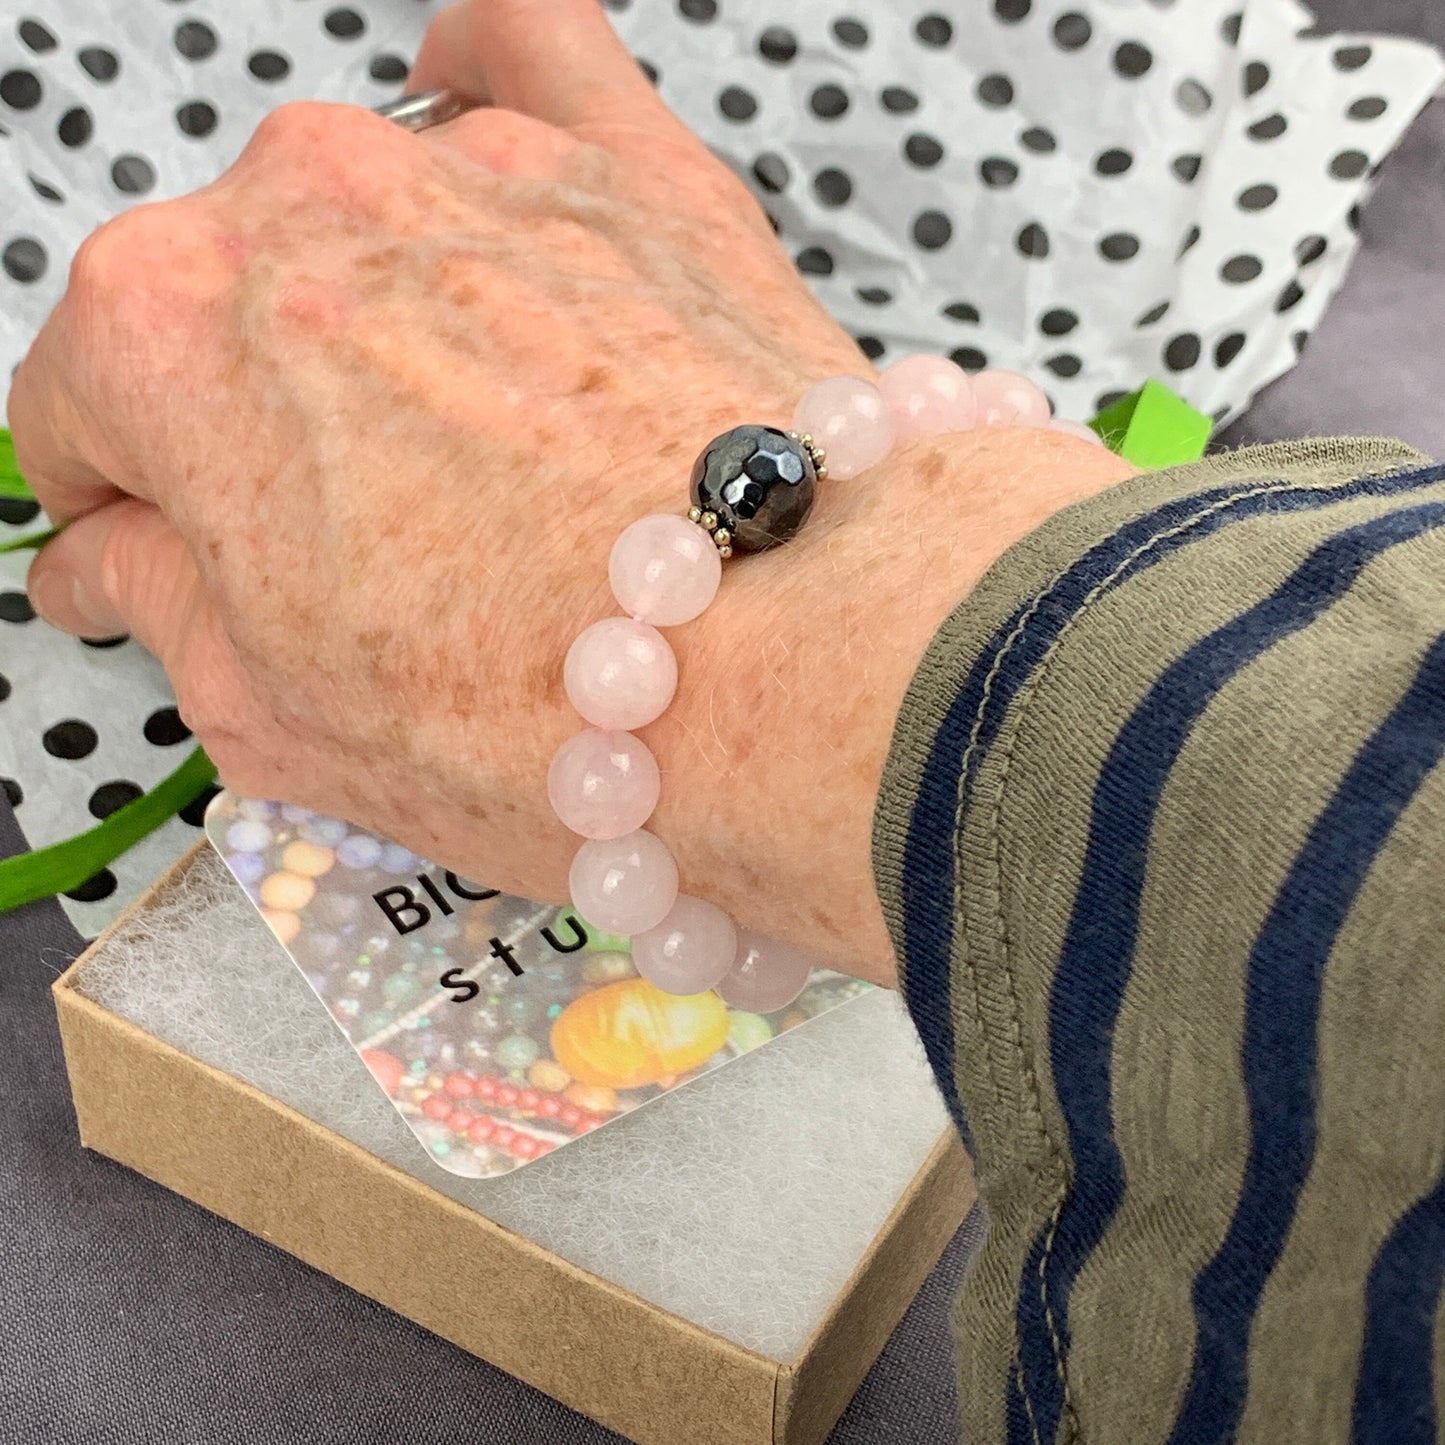 Rose quartz bracelet - gemstone beaded stretchy bracelet - pink rose quartz - hematite - boho bracelet for women - earthy, handmade jewelry